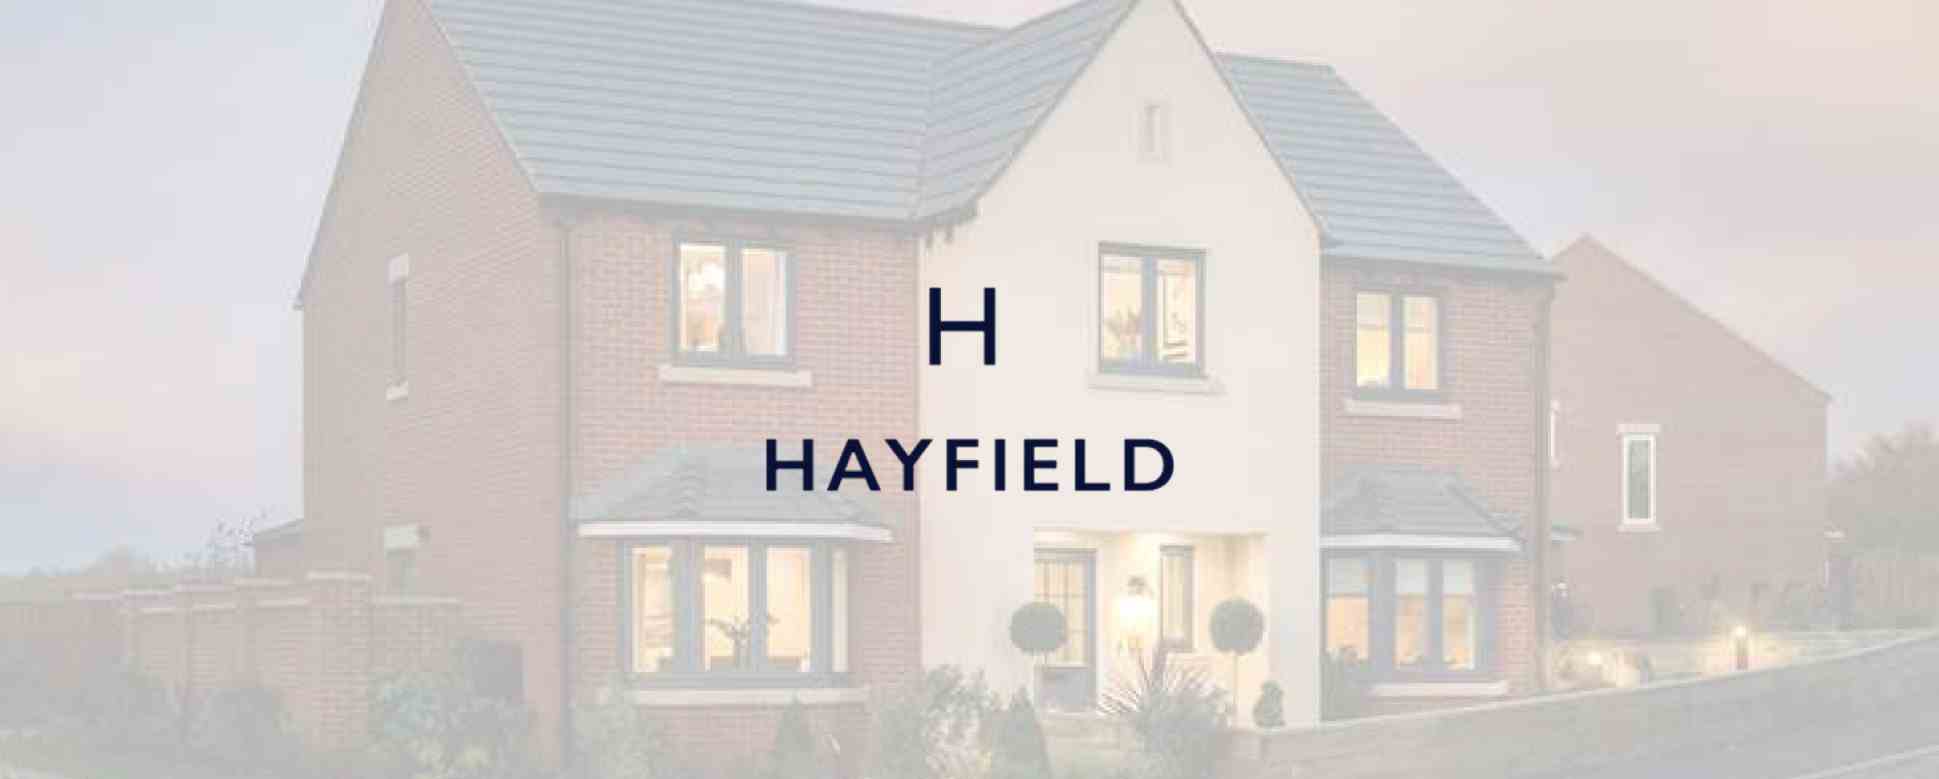 Meet the Developer – Hayfield Homes